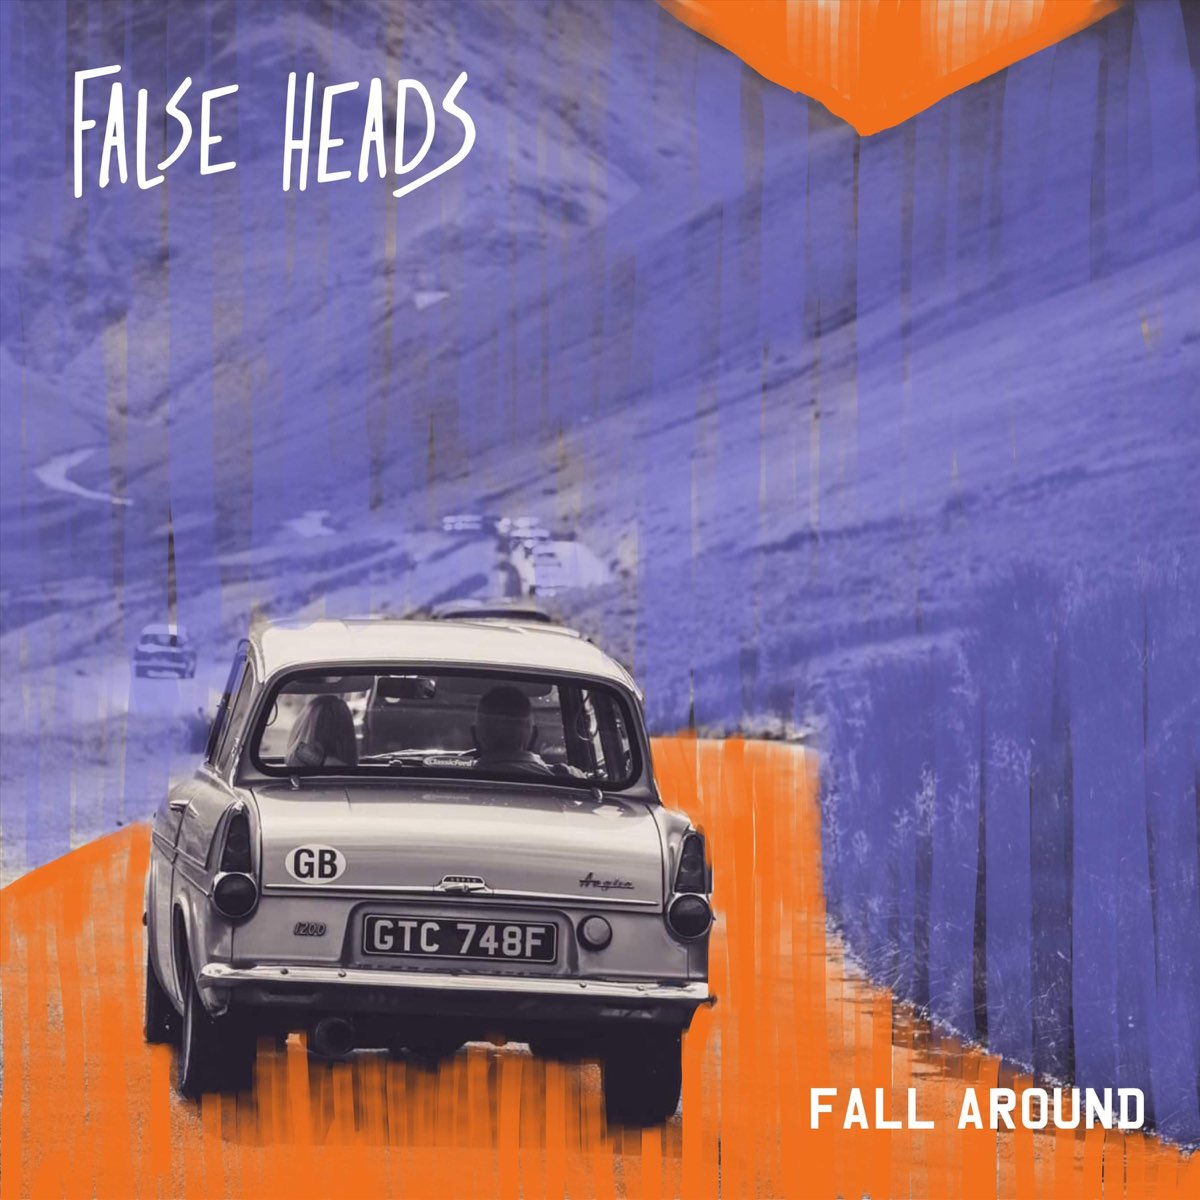 False heads Band. Falling around